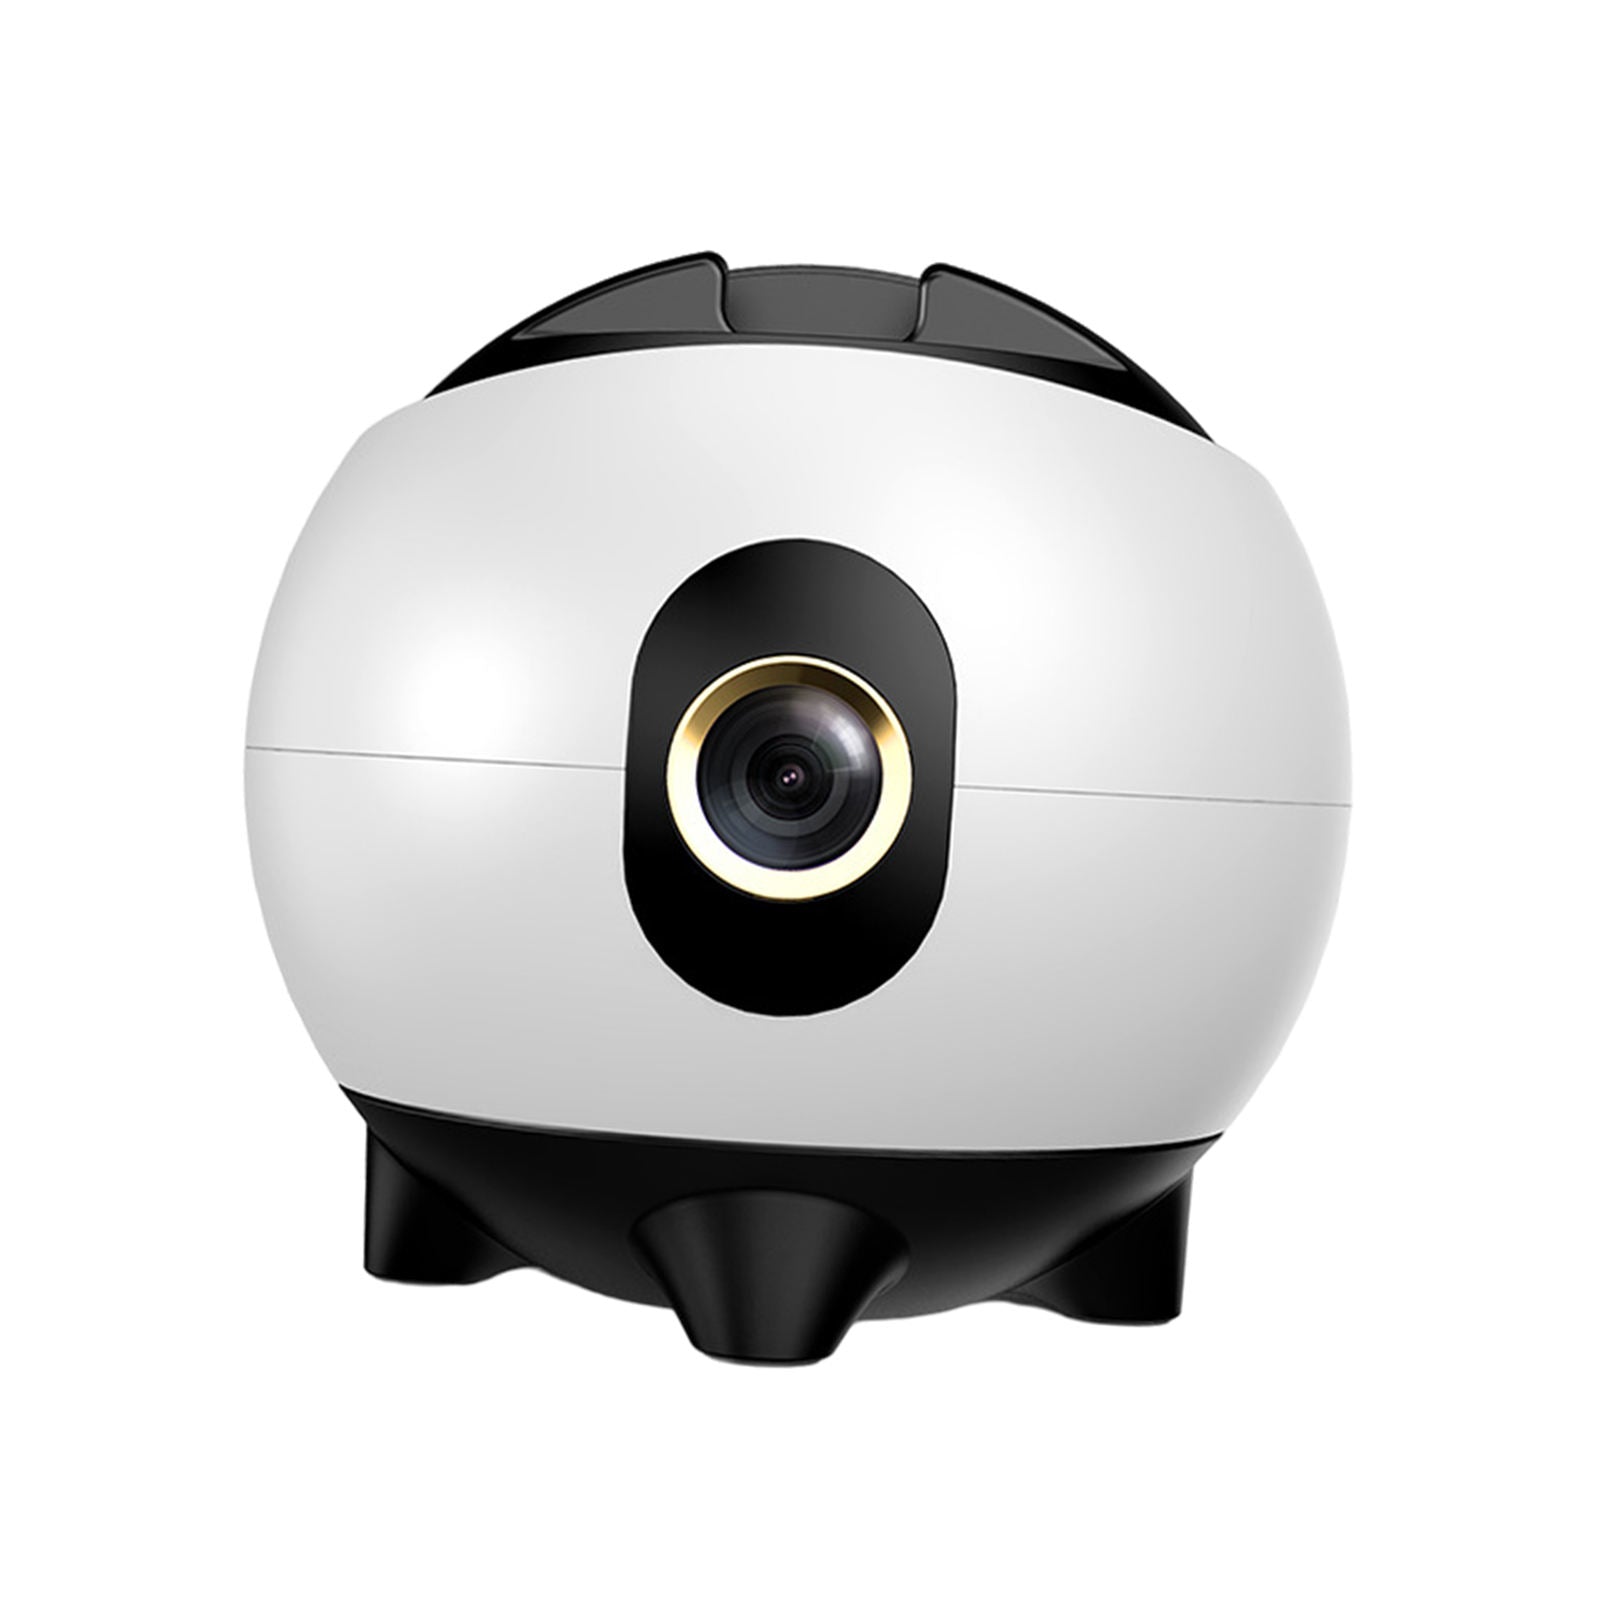 Rotating Intelligent Cameras Gimbal Stabilizer Personal Robot Cameraman Auto